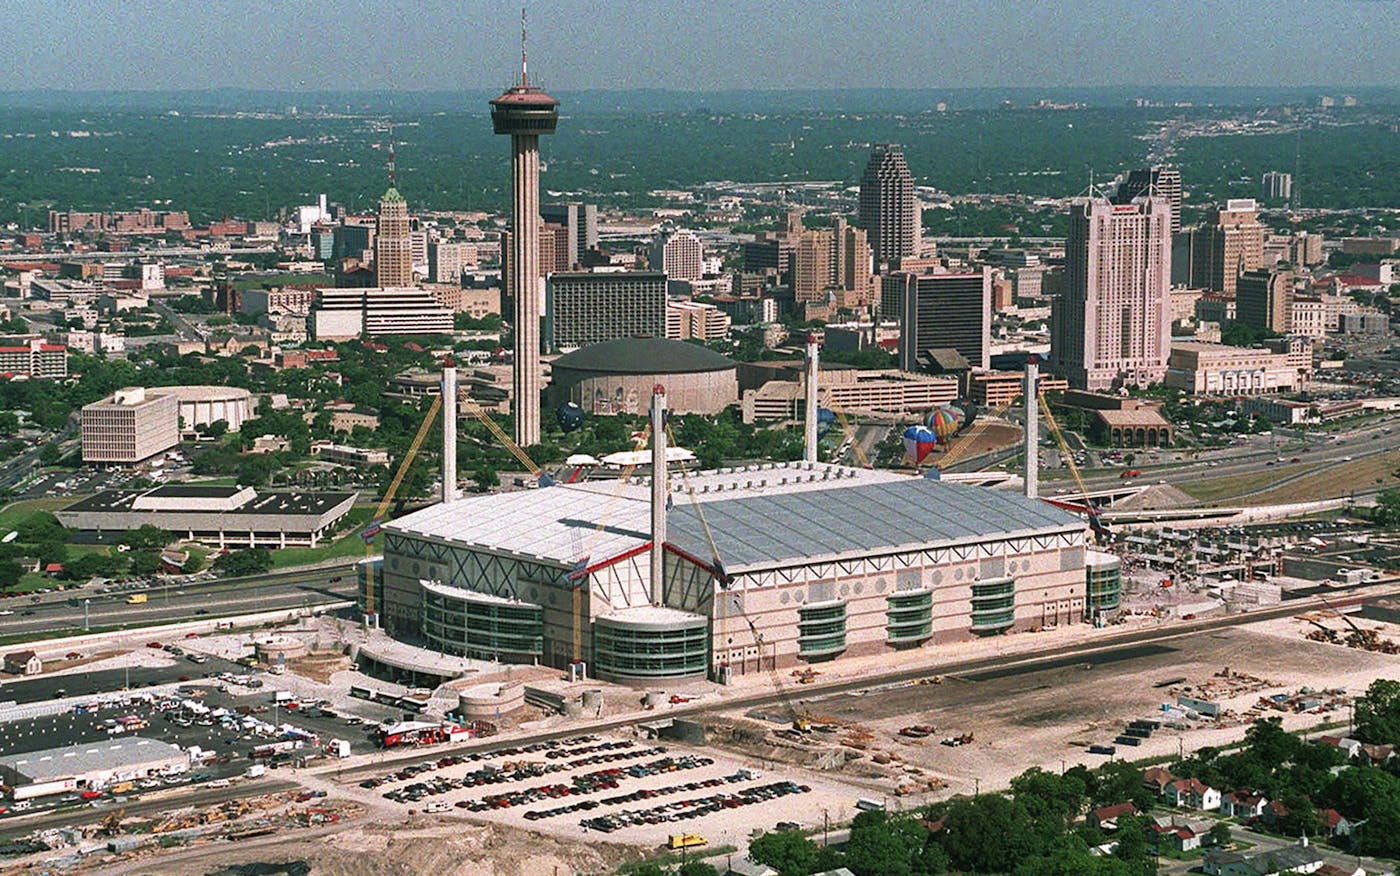 Alamodome Stadium in San Antonio Texas from above - aerial view